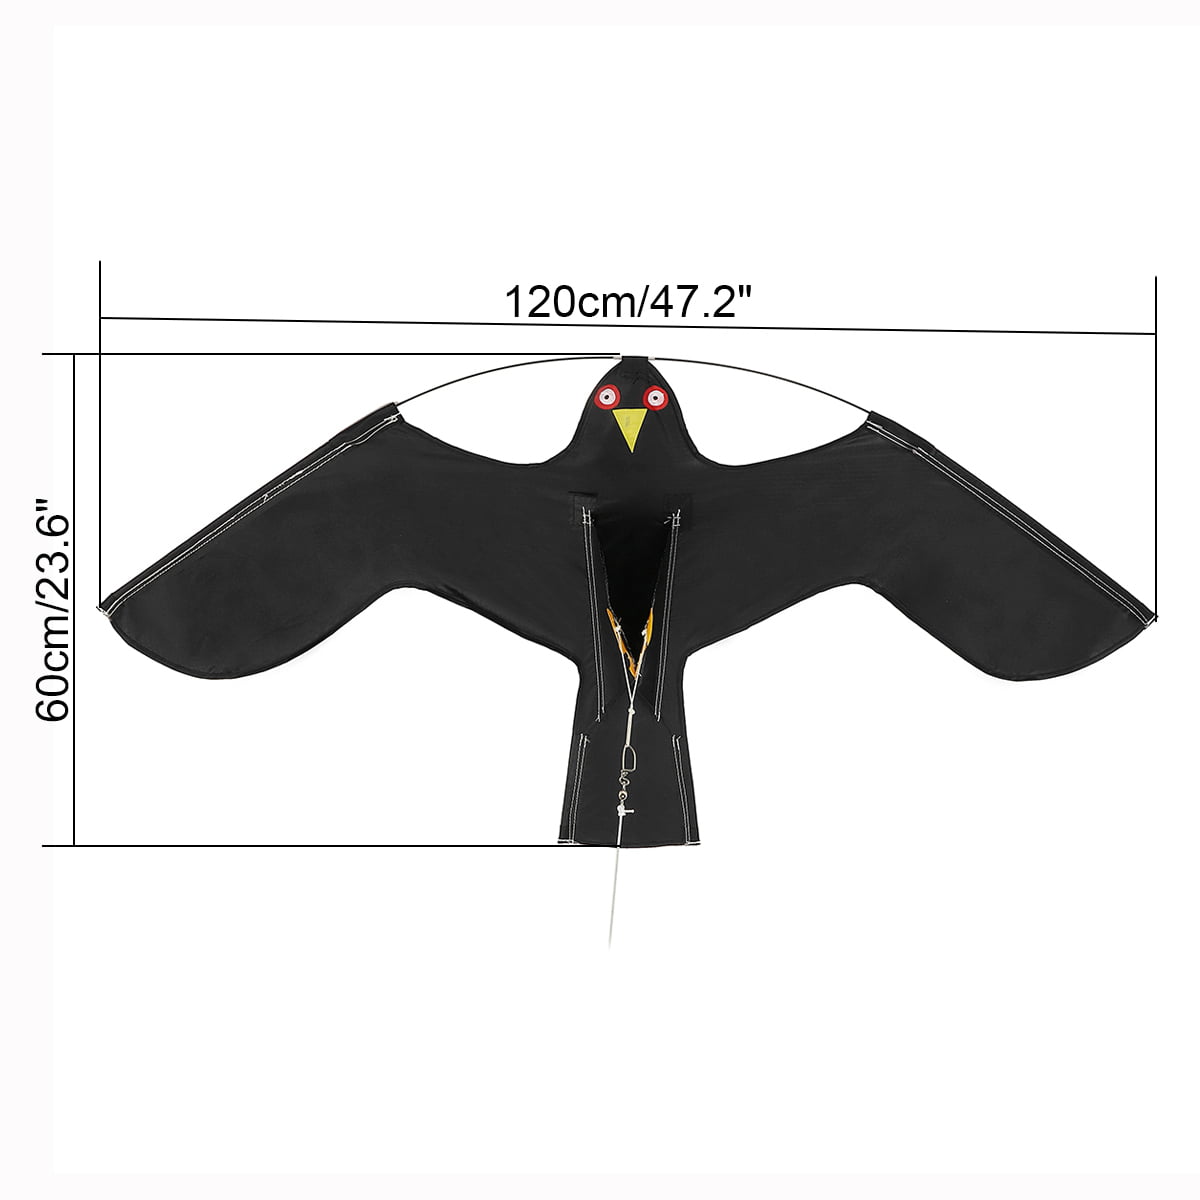 Hawk Kite Flying Bird Scarer Decoy Pest Control Protect Farmers Crops Garden ω 